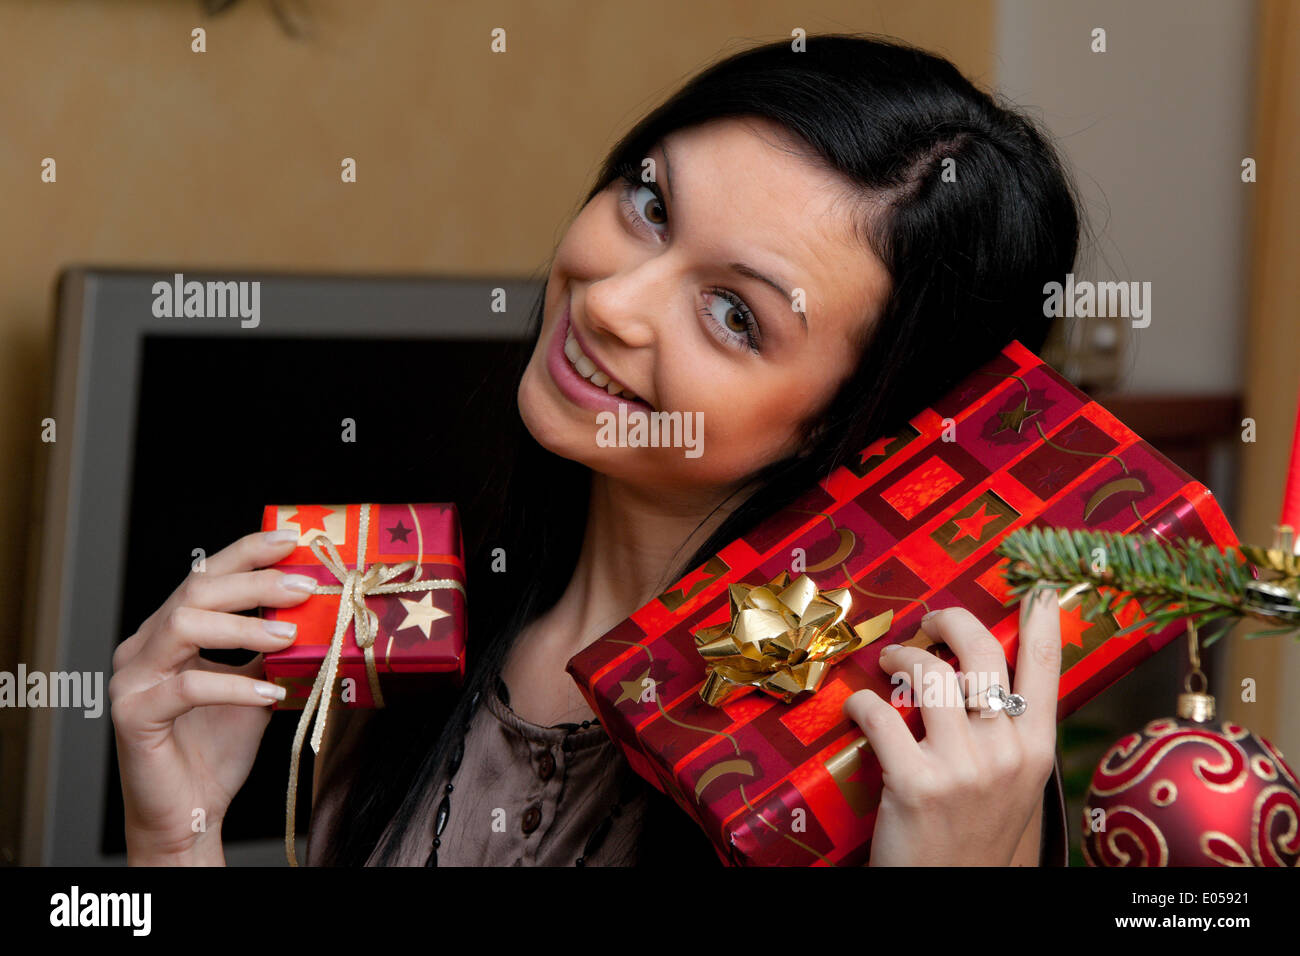 Young woman with Christmas presents, Junge Frau mit Weihnachtsgeschenken Stock Photo